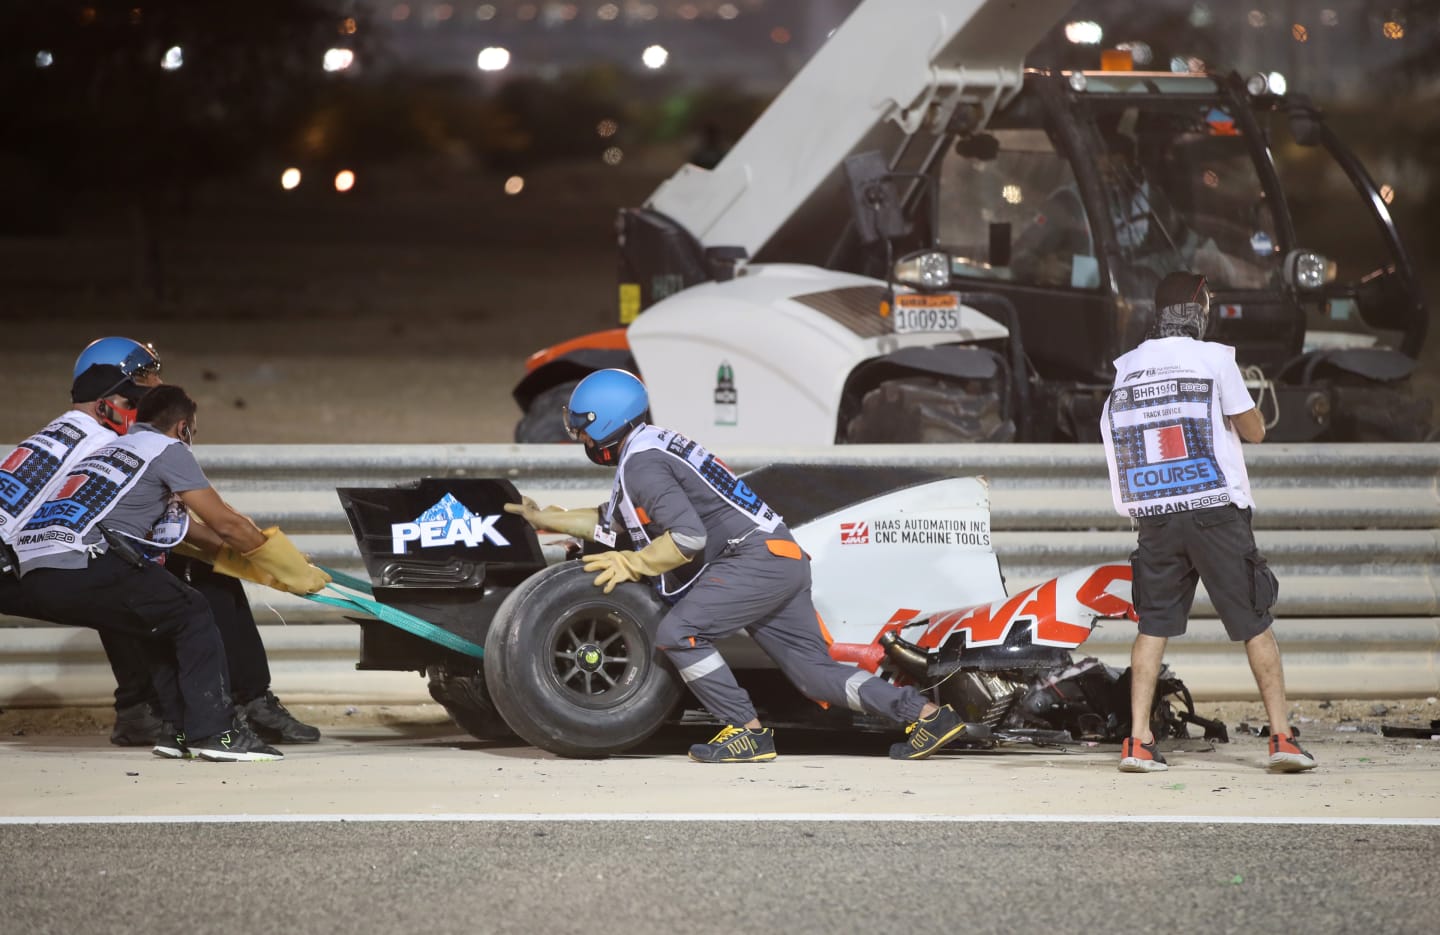 BAHRAIN, BAHRAIN - NOVEMBER 29: Track marshals clear the debris following the crash of Romain